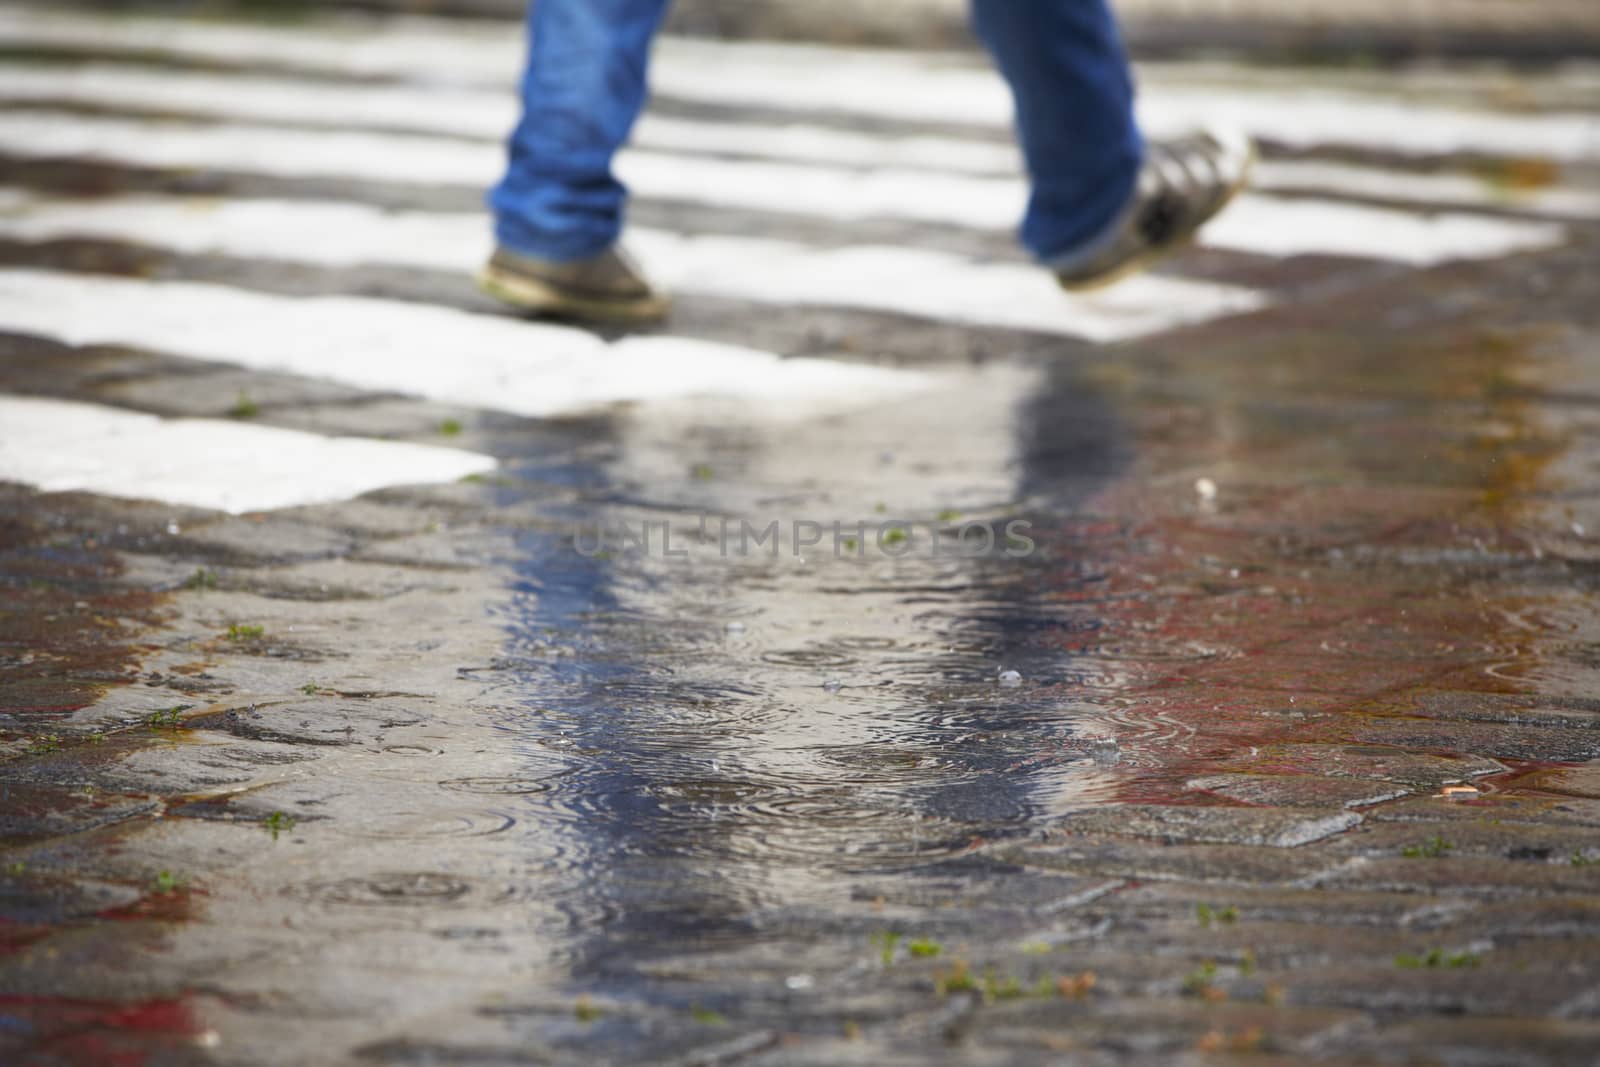 Man is walking on the zebra crossing in rain - selective focus